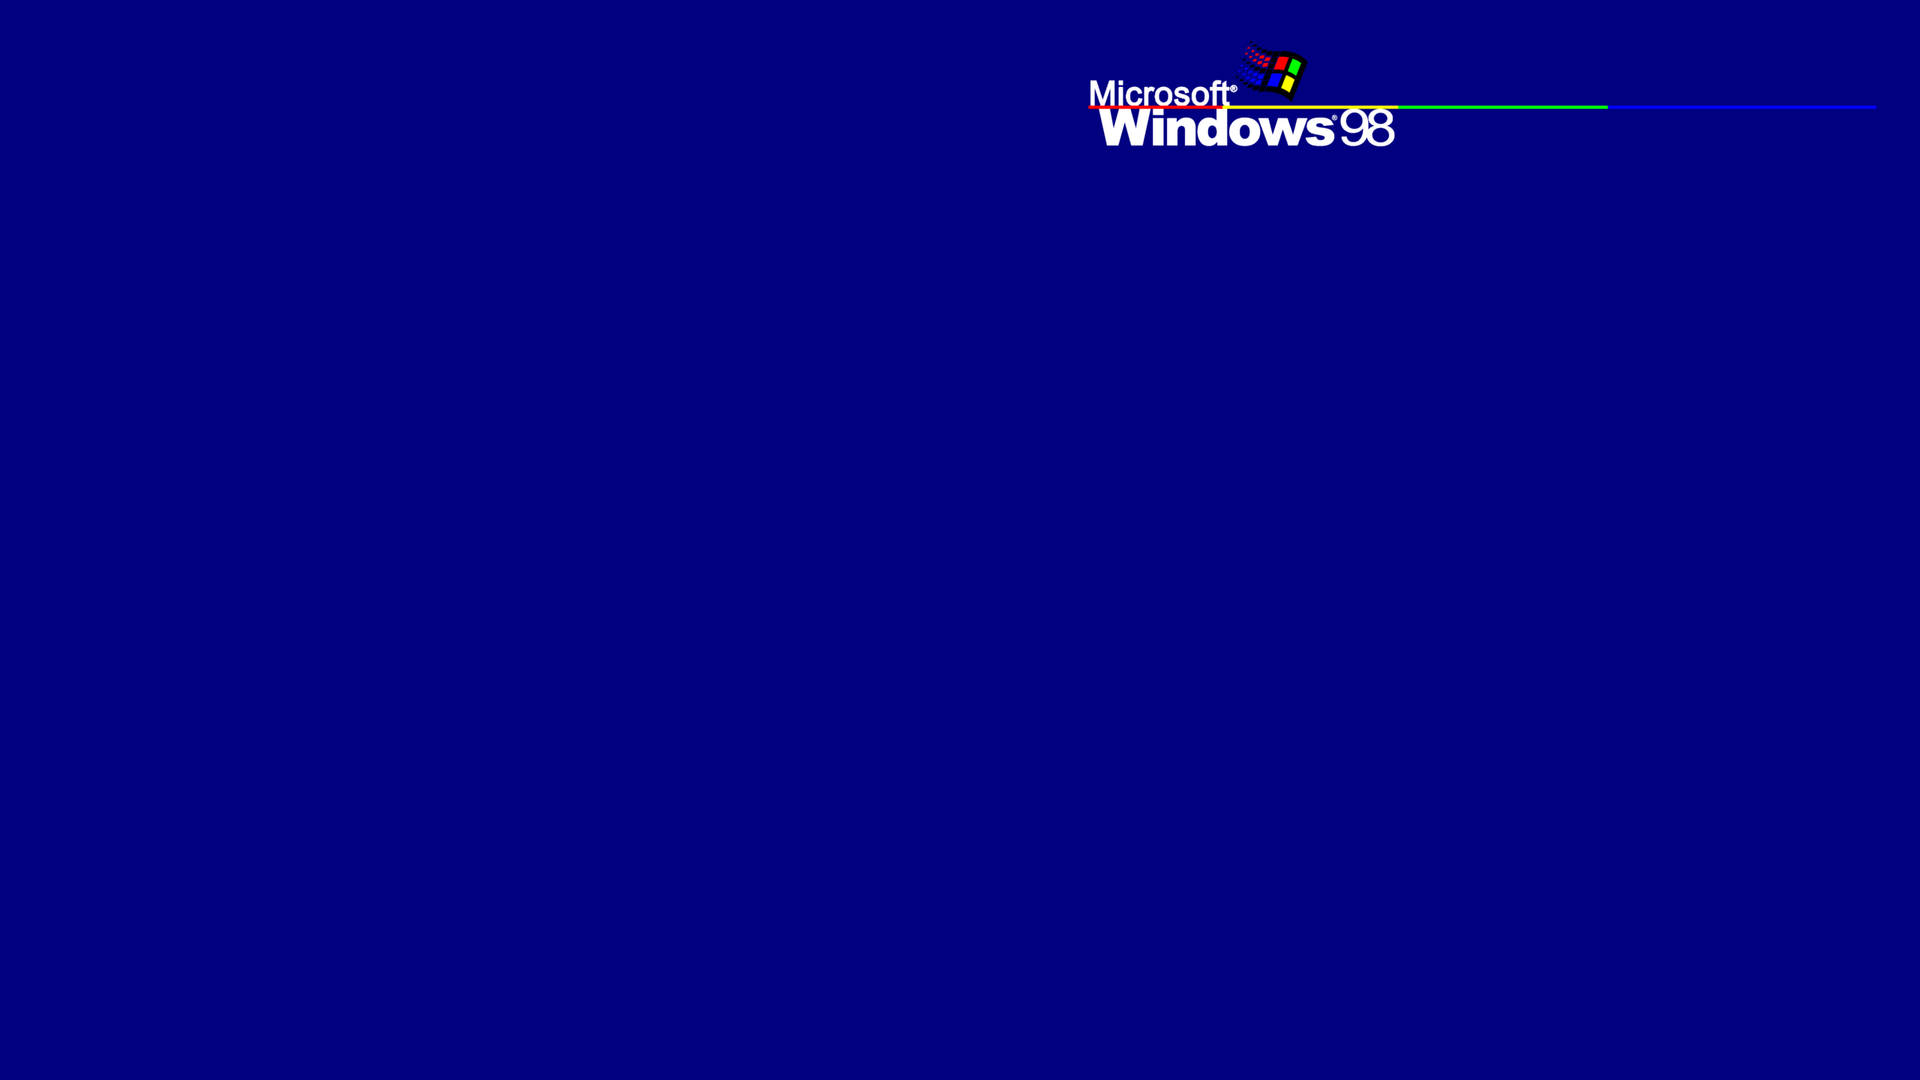 Windows 98 Desktop Wallpaper